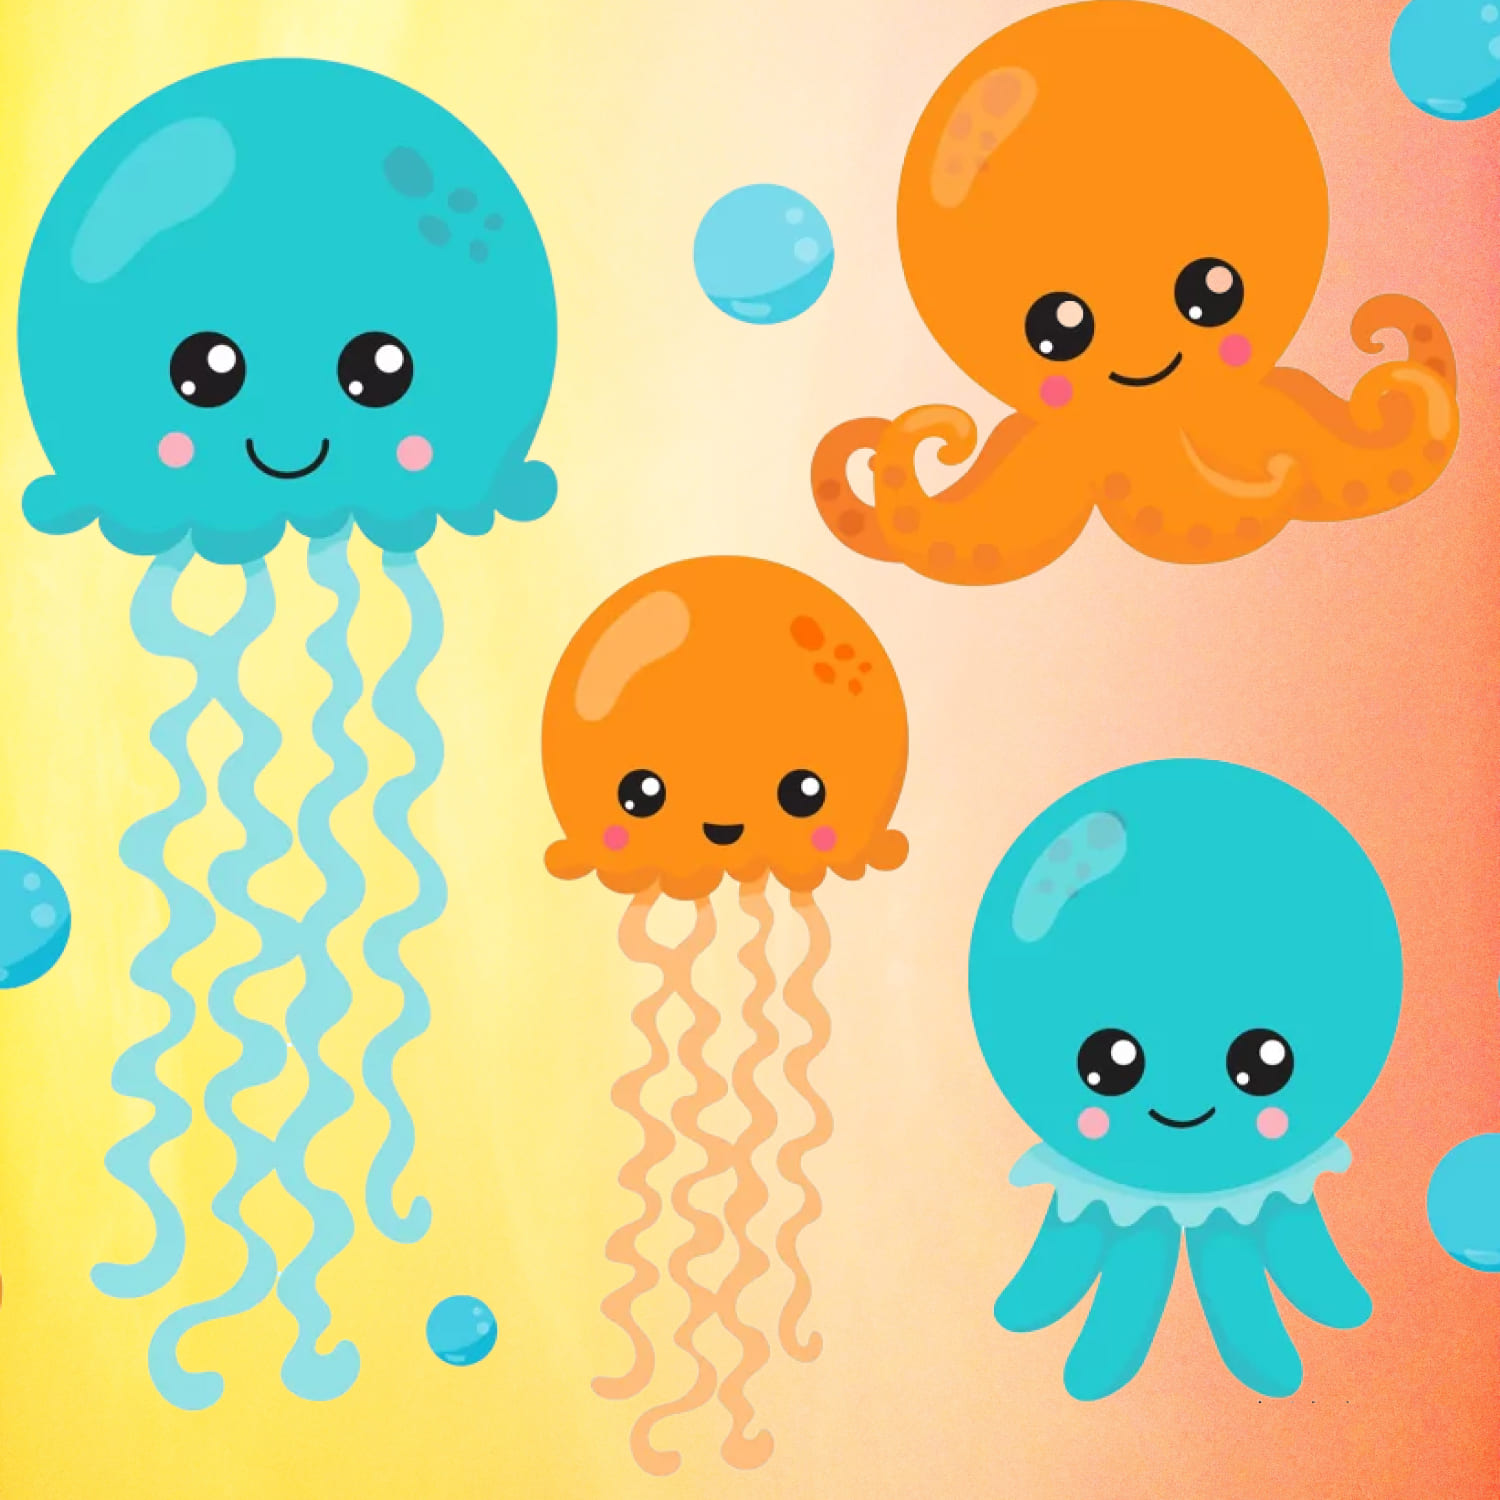 hipster octopus illustrations set.